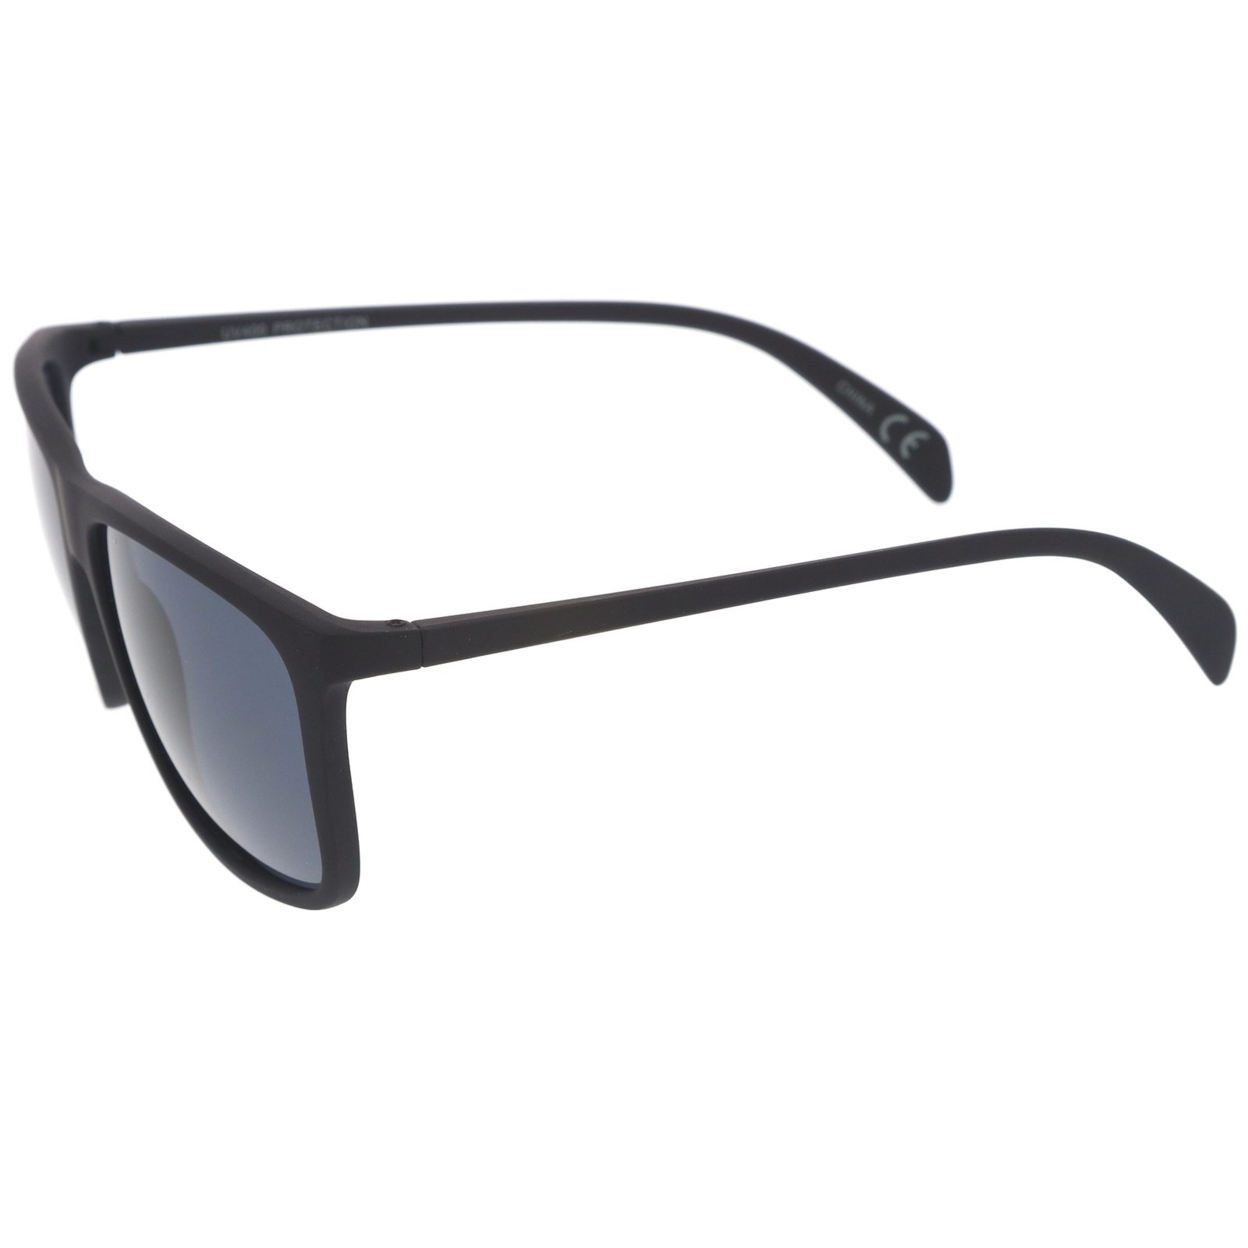 Lifestyle Rubberized Matte Finish Slim Temple Flat Top Square Sunglasses 56mm - Rubberized Black / Smoke